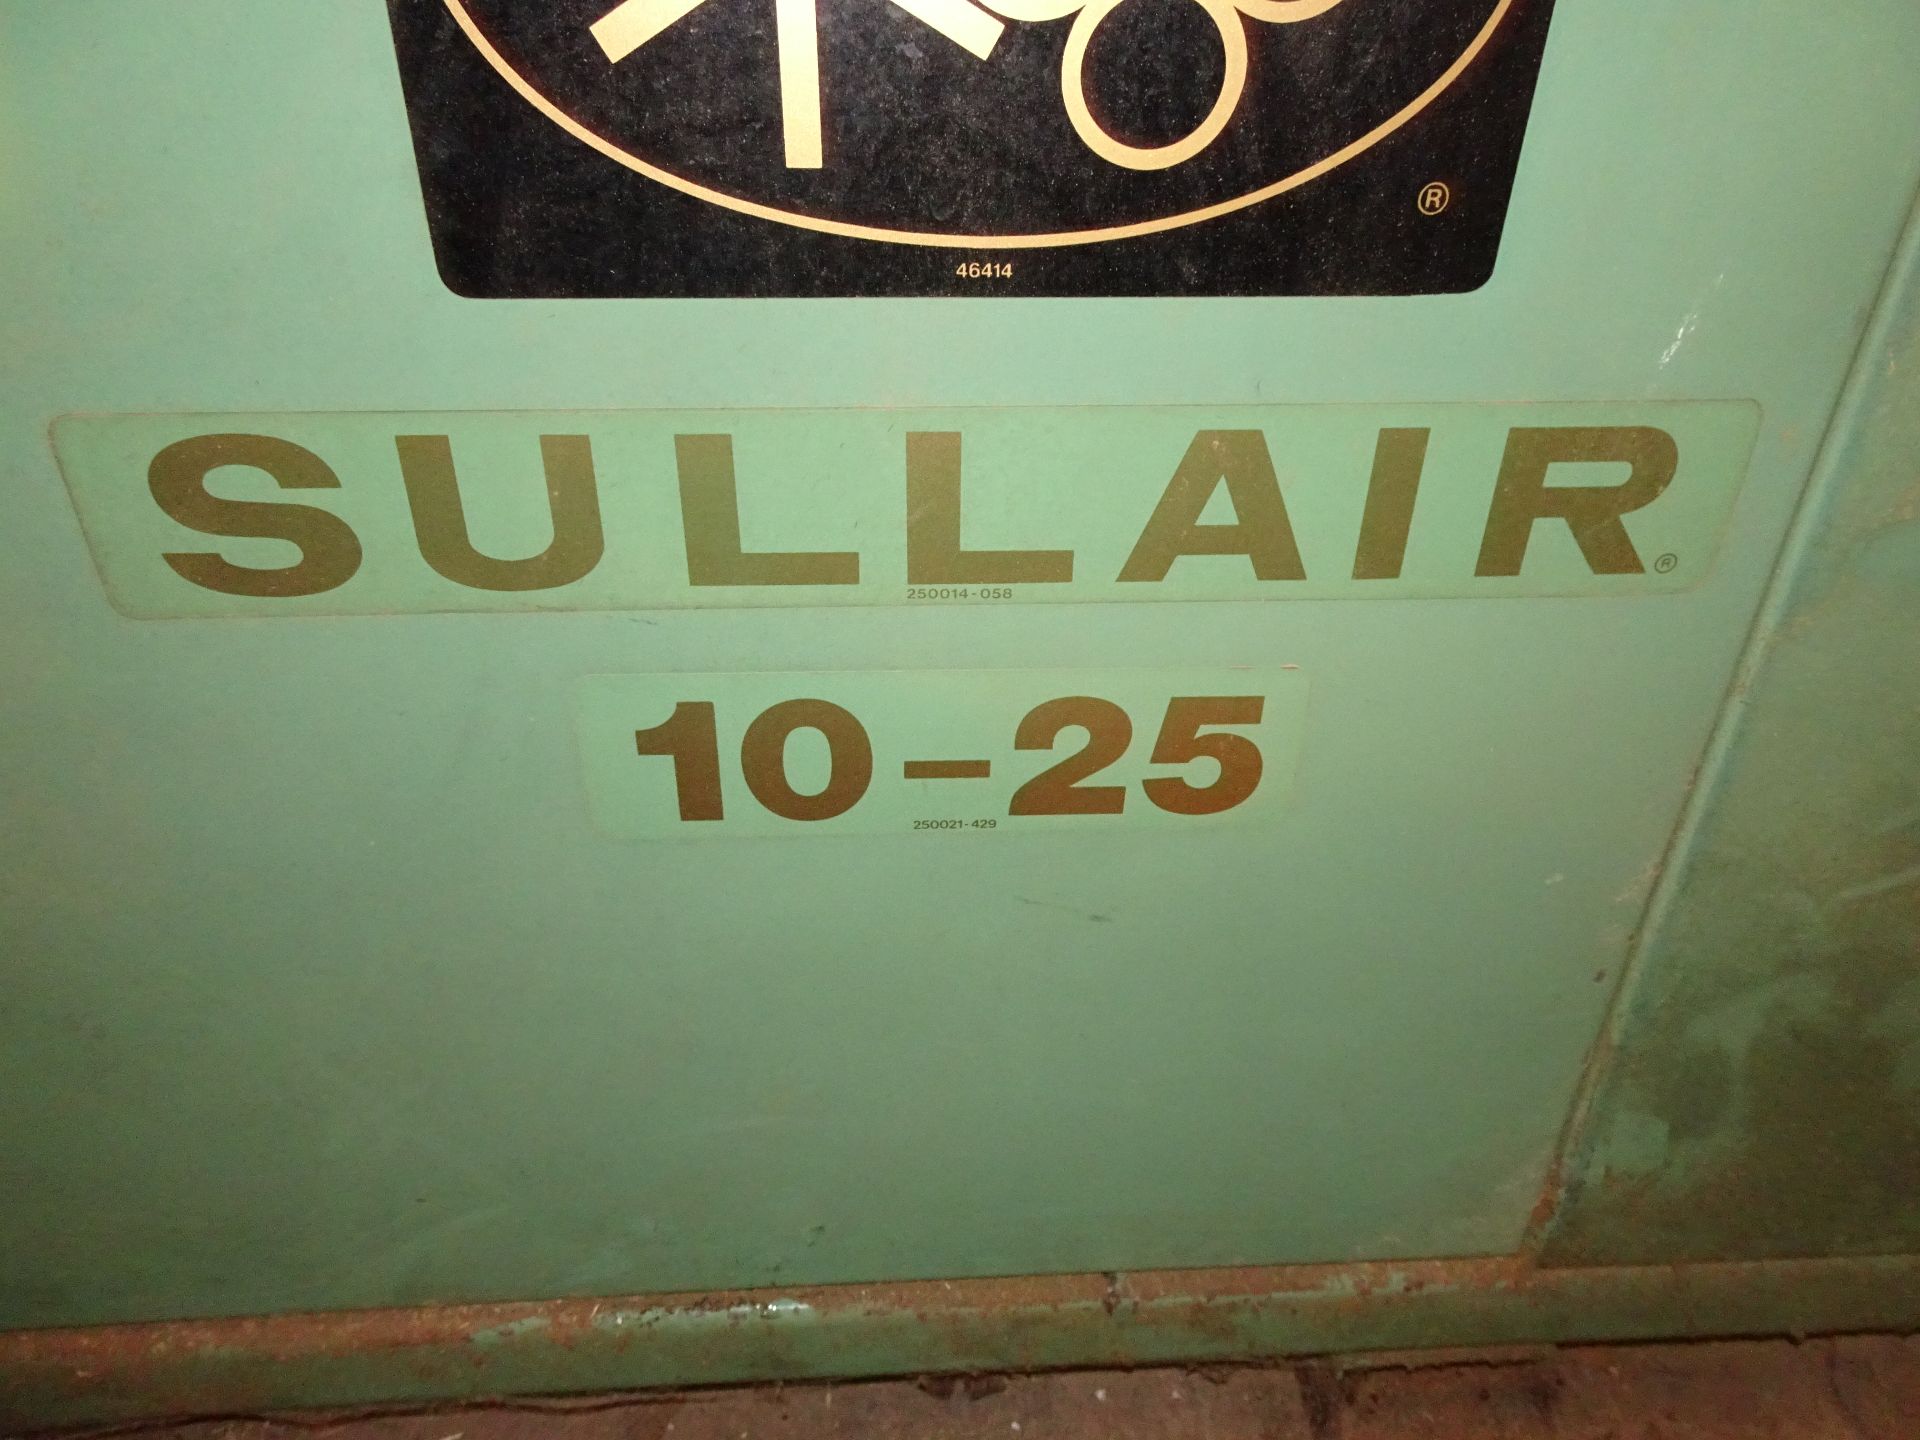 Sullair Model 10-25 Rotary Screw Air Compressor - Image 3 of 3